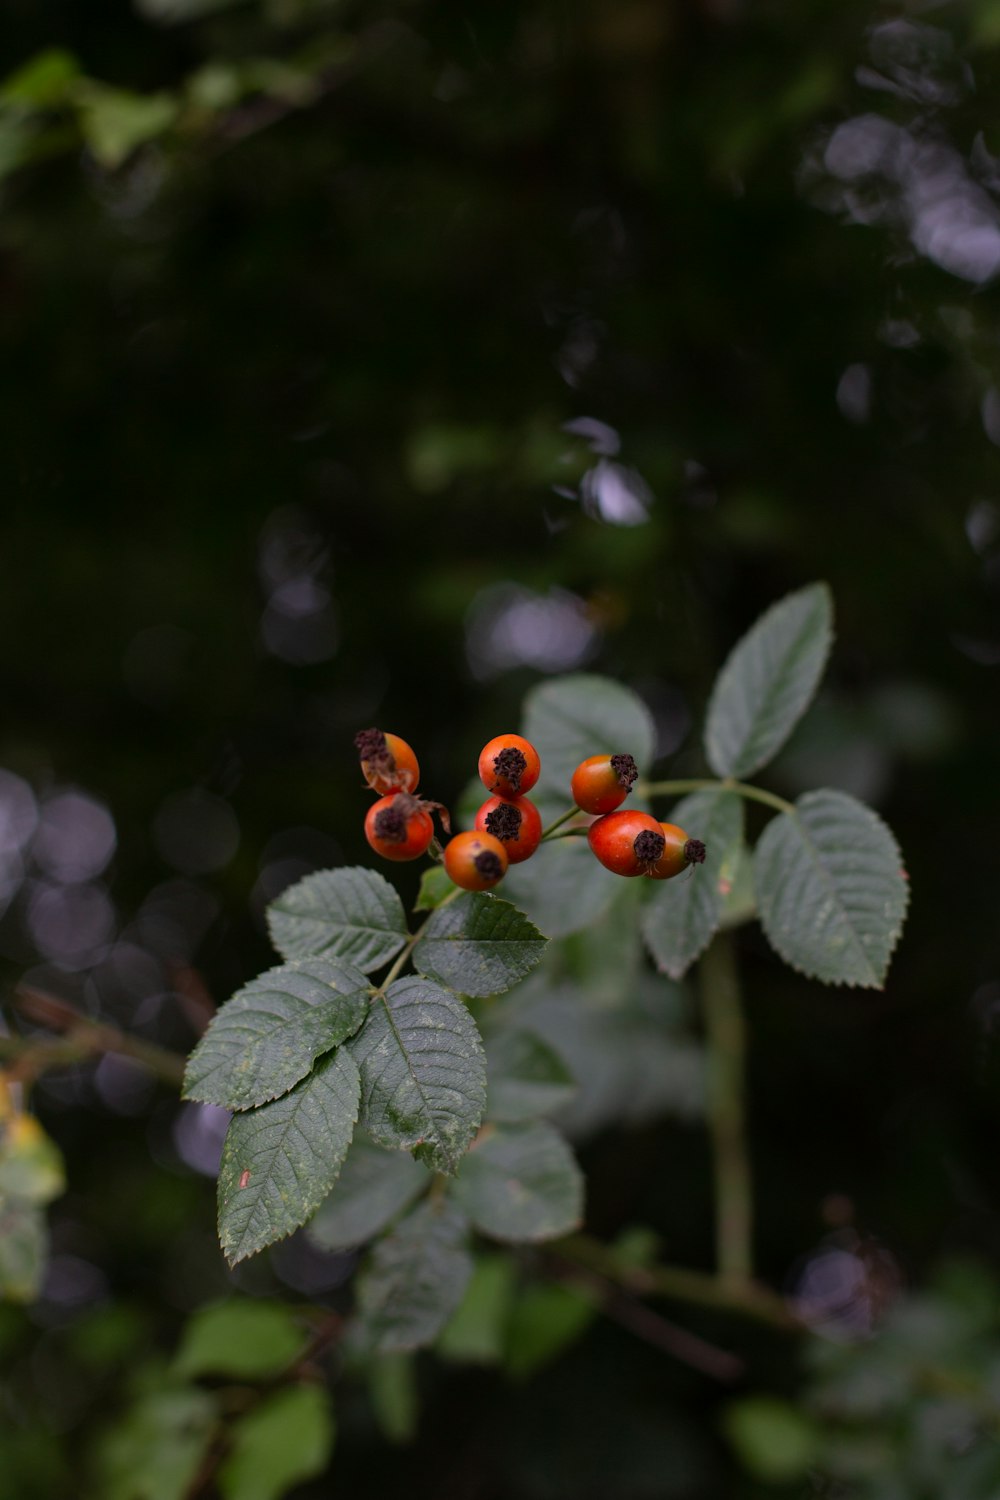 a group of ladybugs on a leaf